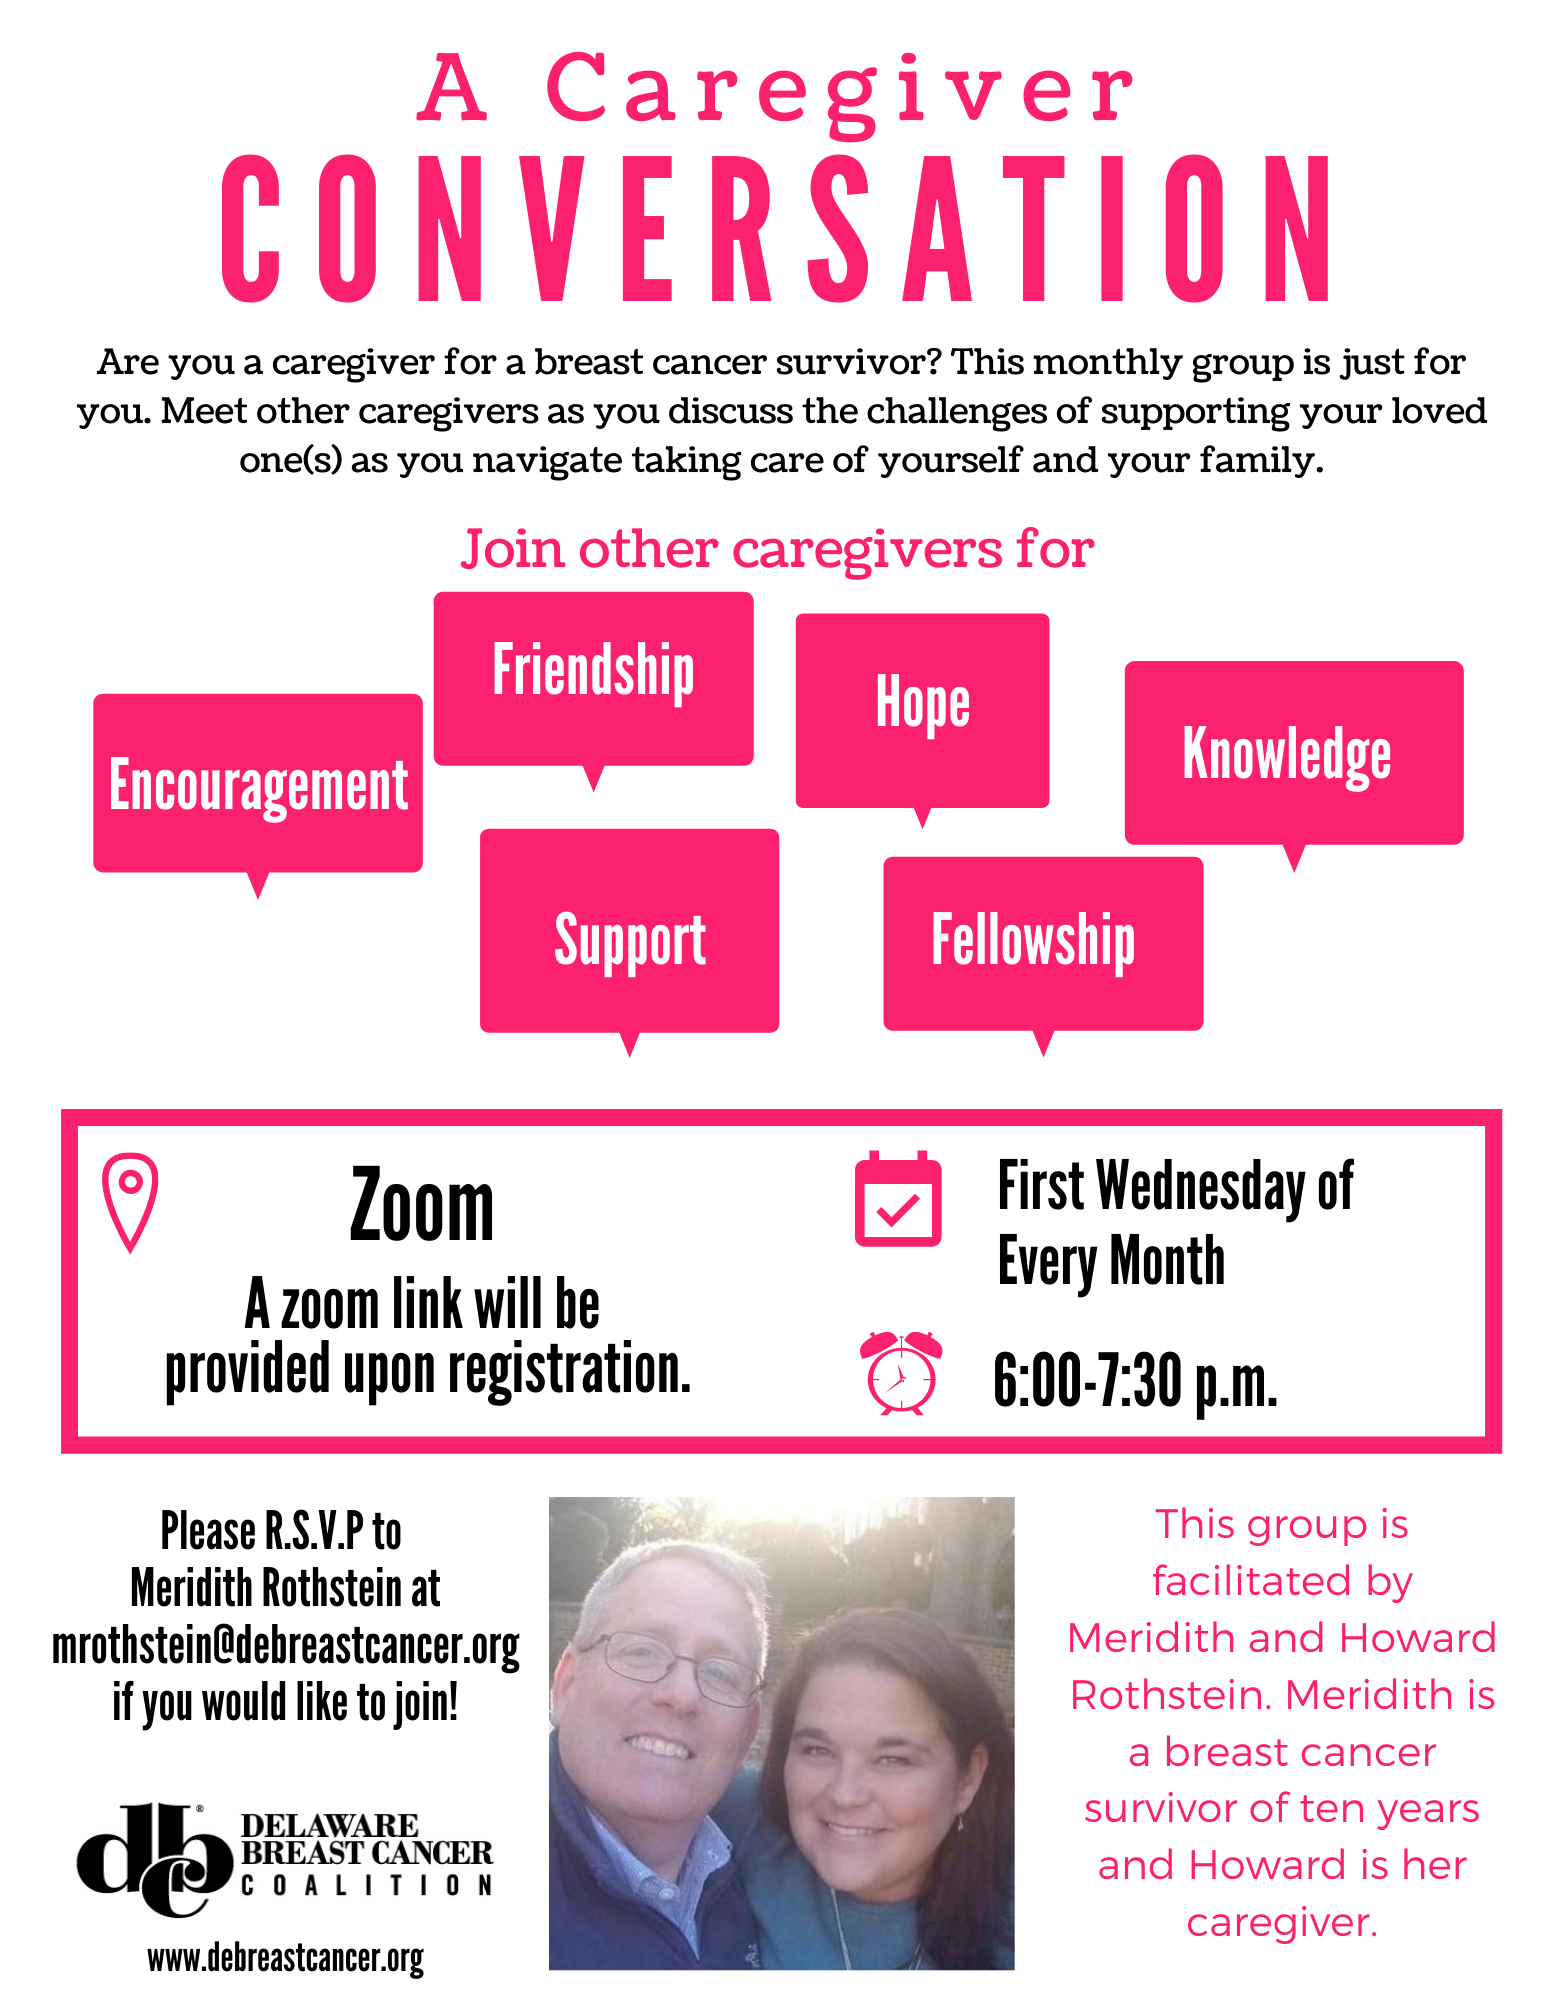 A Caregiver Conversation event flyer